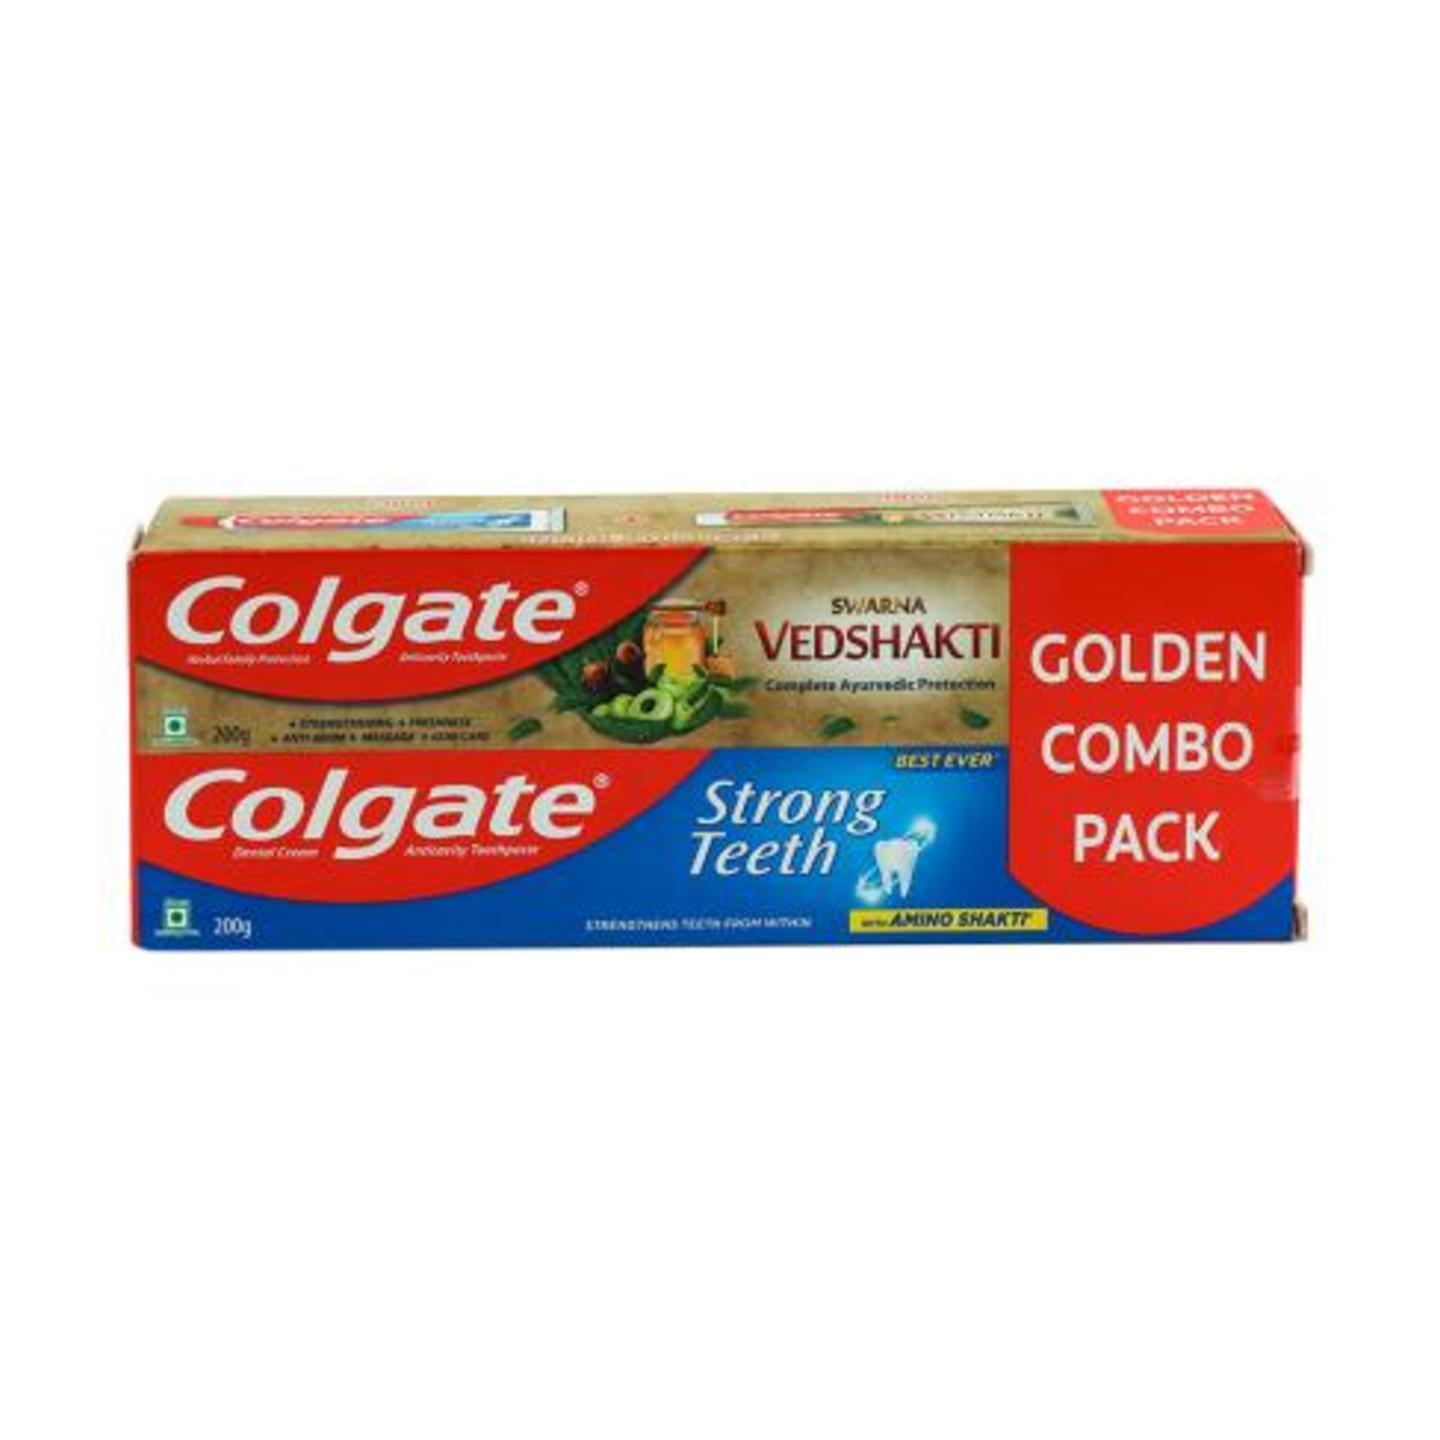 Colgate Dental Cream + Swarna Vedshakti Ayurvedic Toothpaste 200 g + 200 g (Combo Pack) PM/BM 0.15/18 